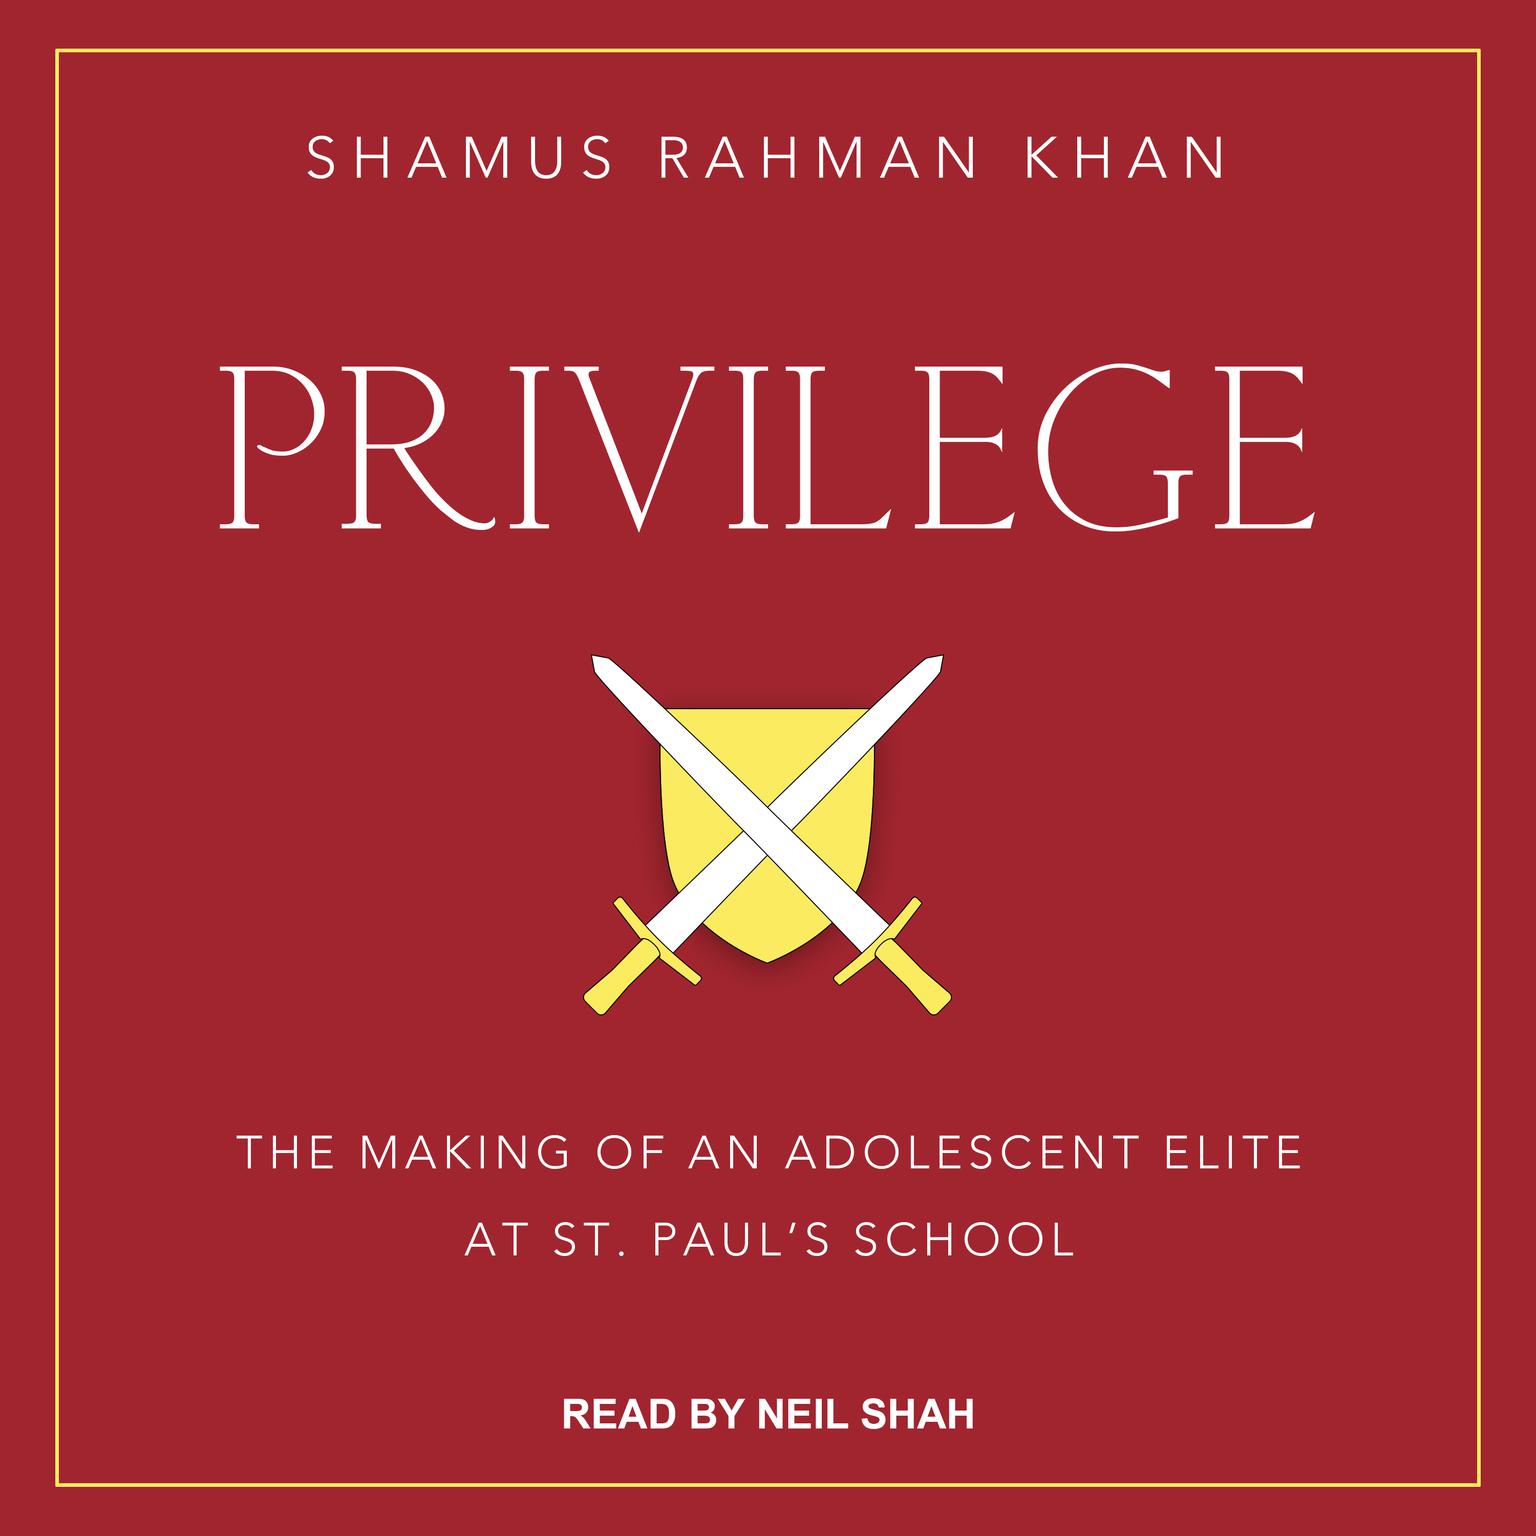 Privilege: The Making of an Adolescent Elite at St. Pauls School Audiobook, by Shamus Rahman Khan